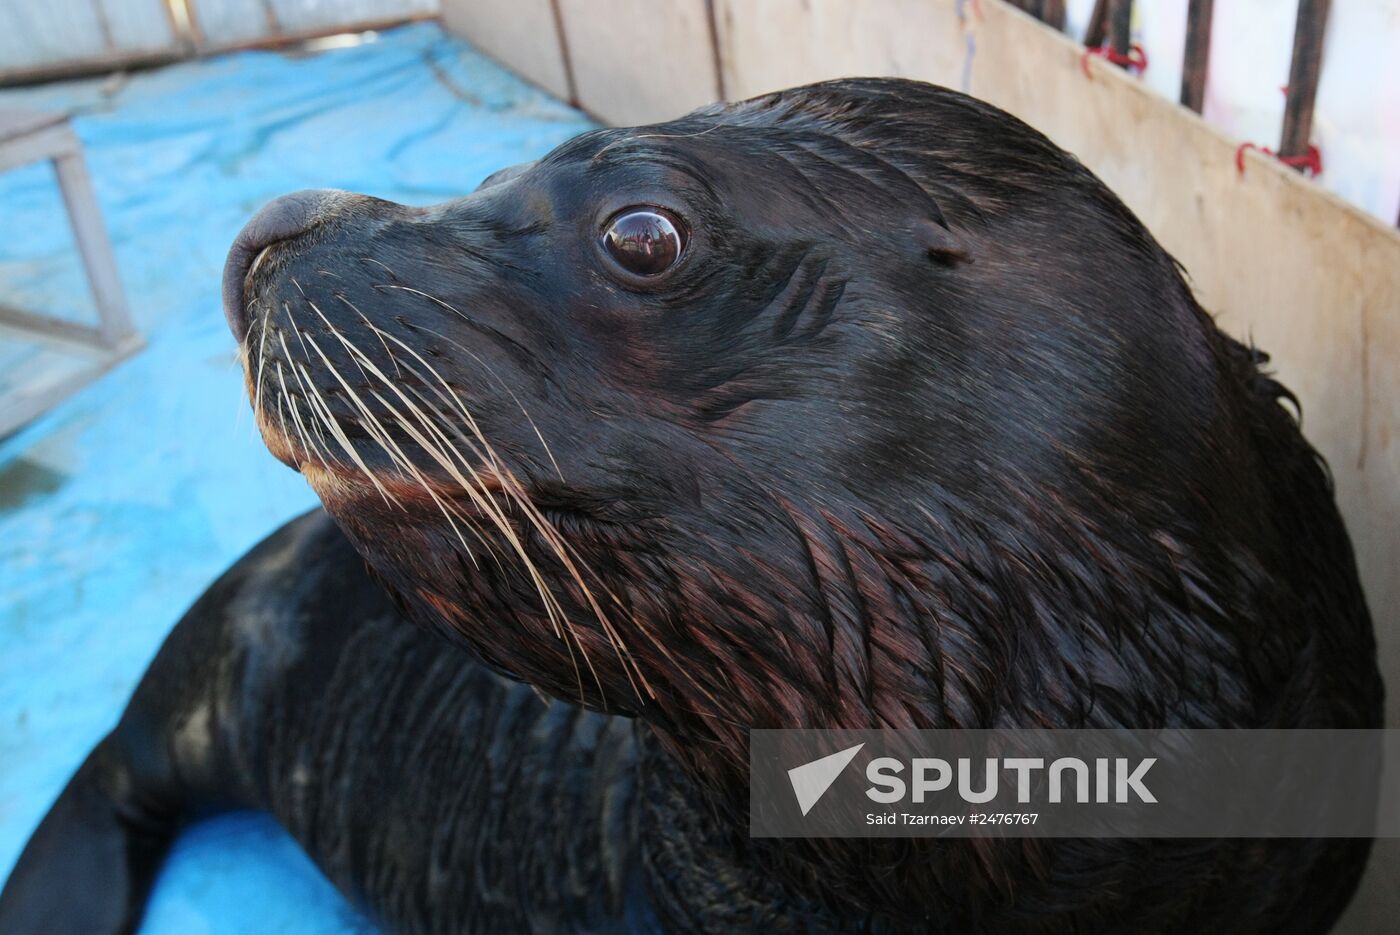 Sea lion born during Moscow circus tour